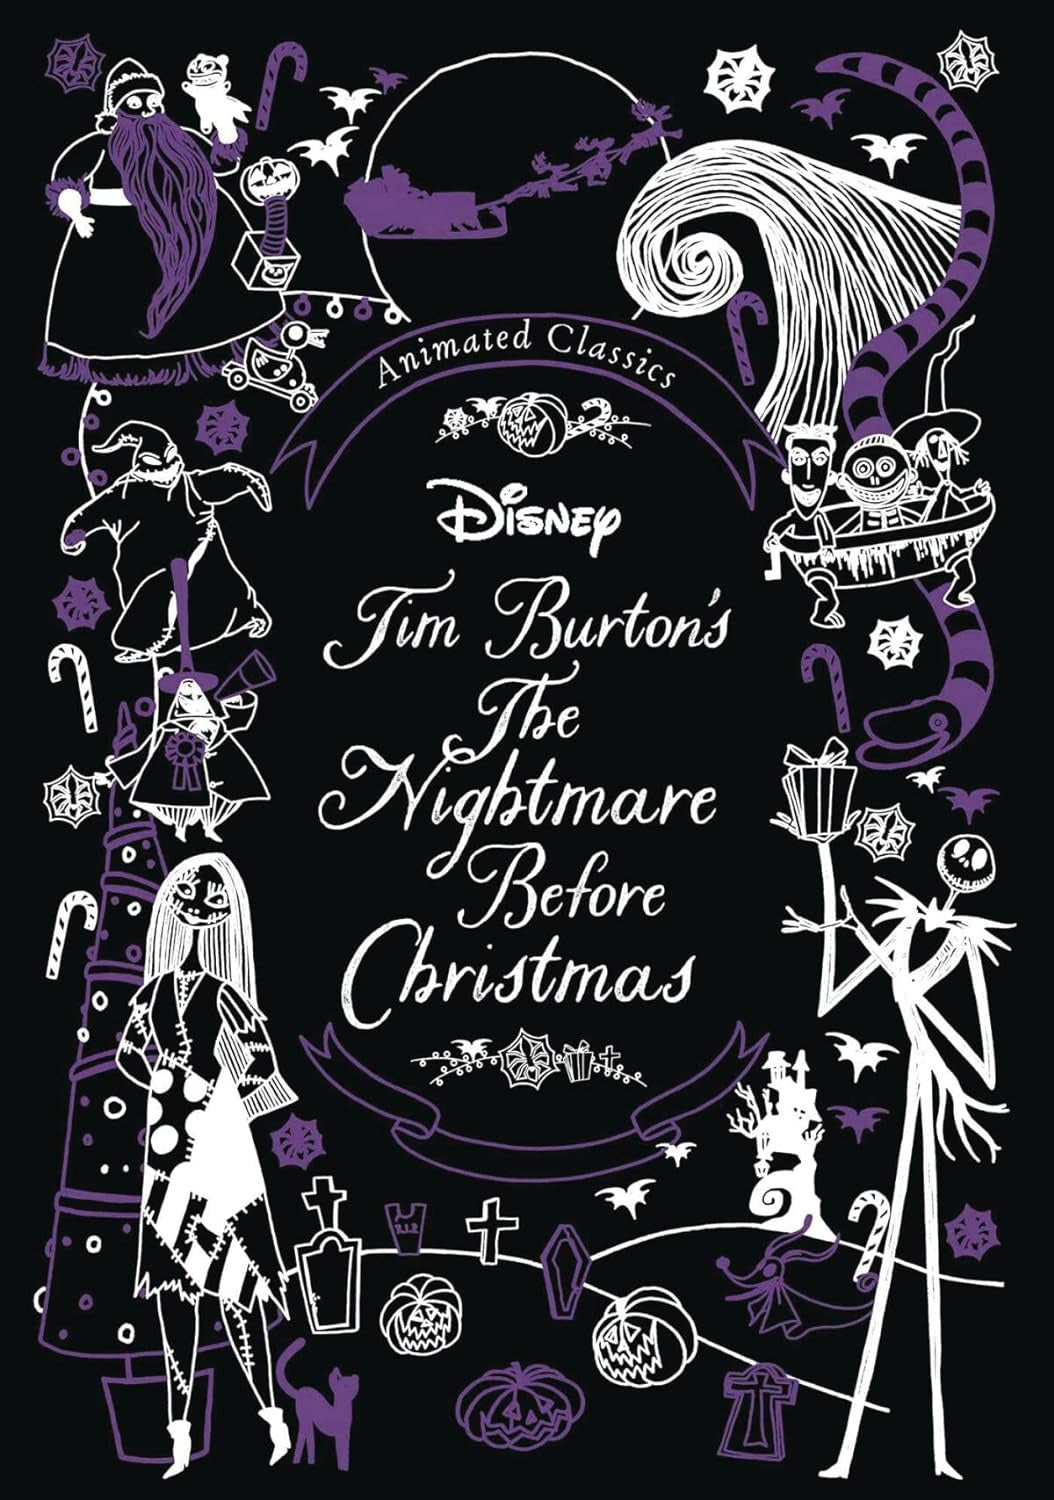 Disney Animated Classics: Tim Burton's The Nightmare Before Christmas Hardcover